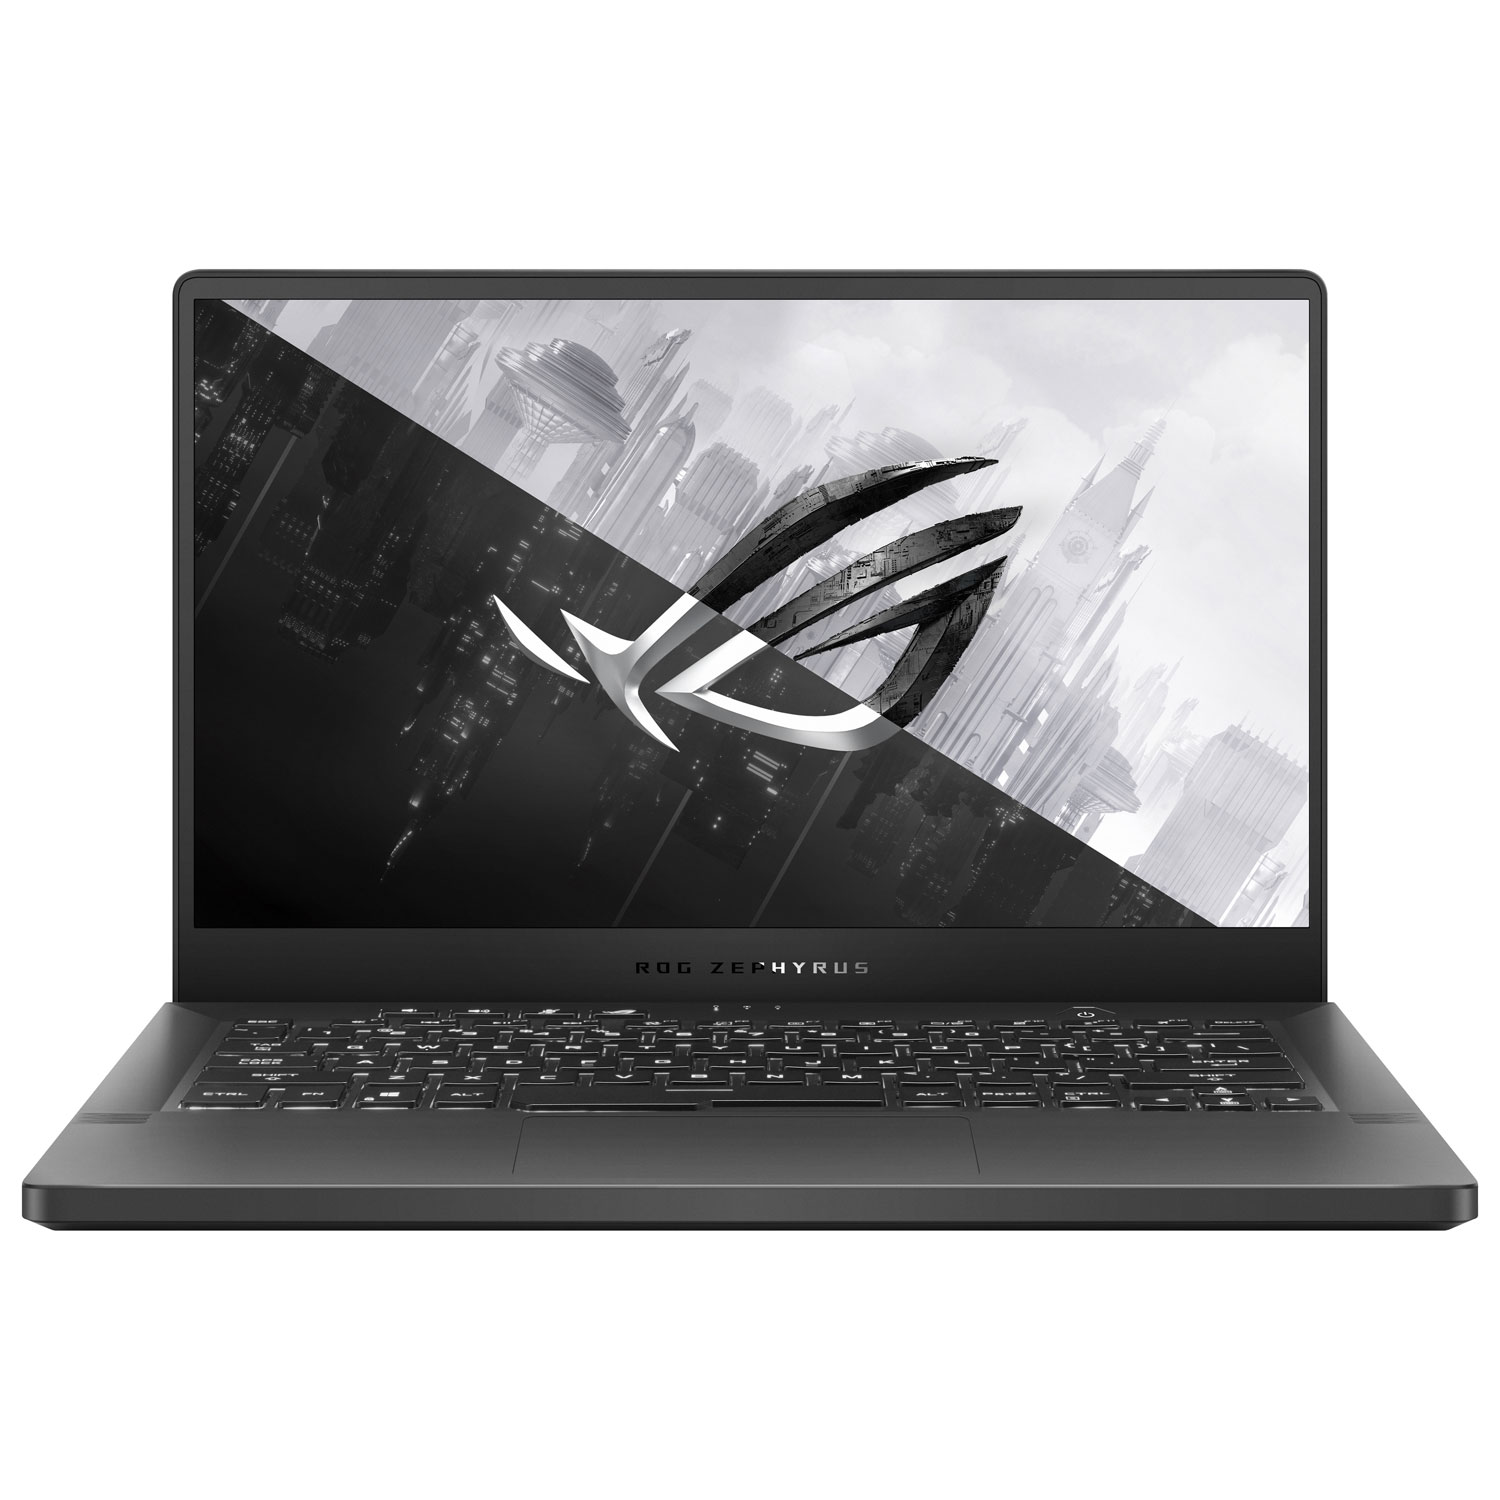 ASUS ROG Zephyrus G14 14" Gaming Laptop - Grey (AMD Ryzen 9 5900HS/1TB SSD/16GB RAM/RTX 3060/Win 10)